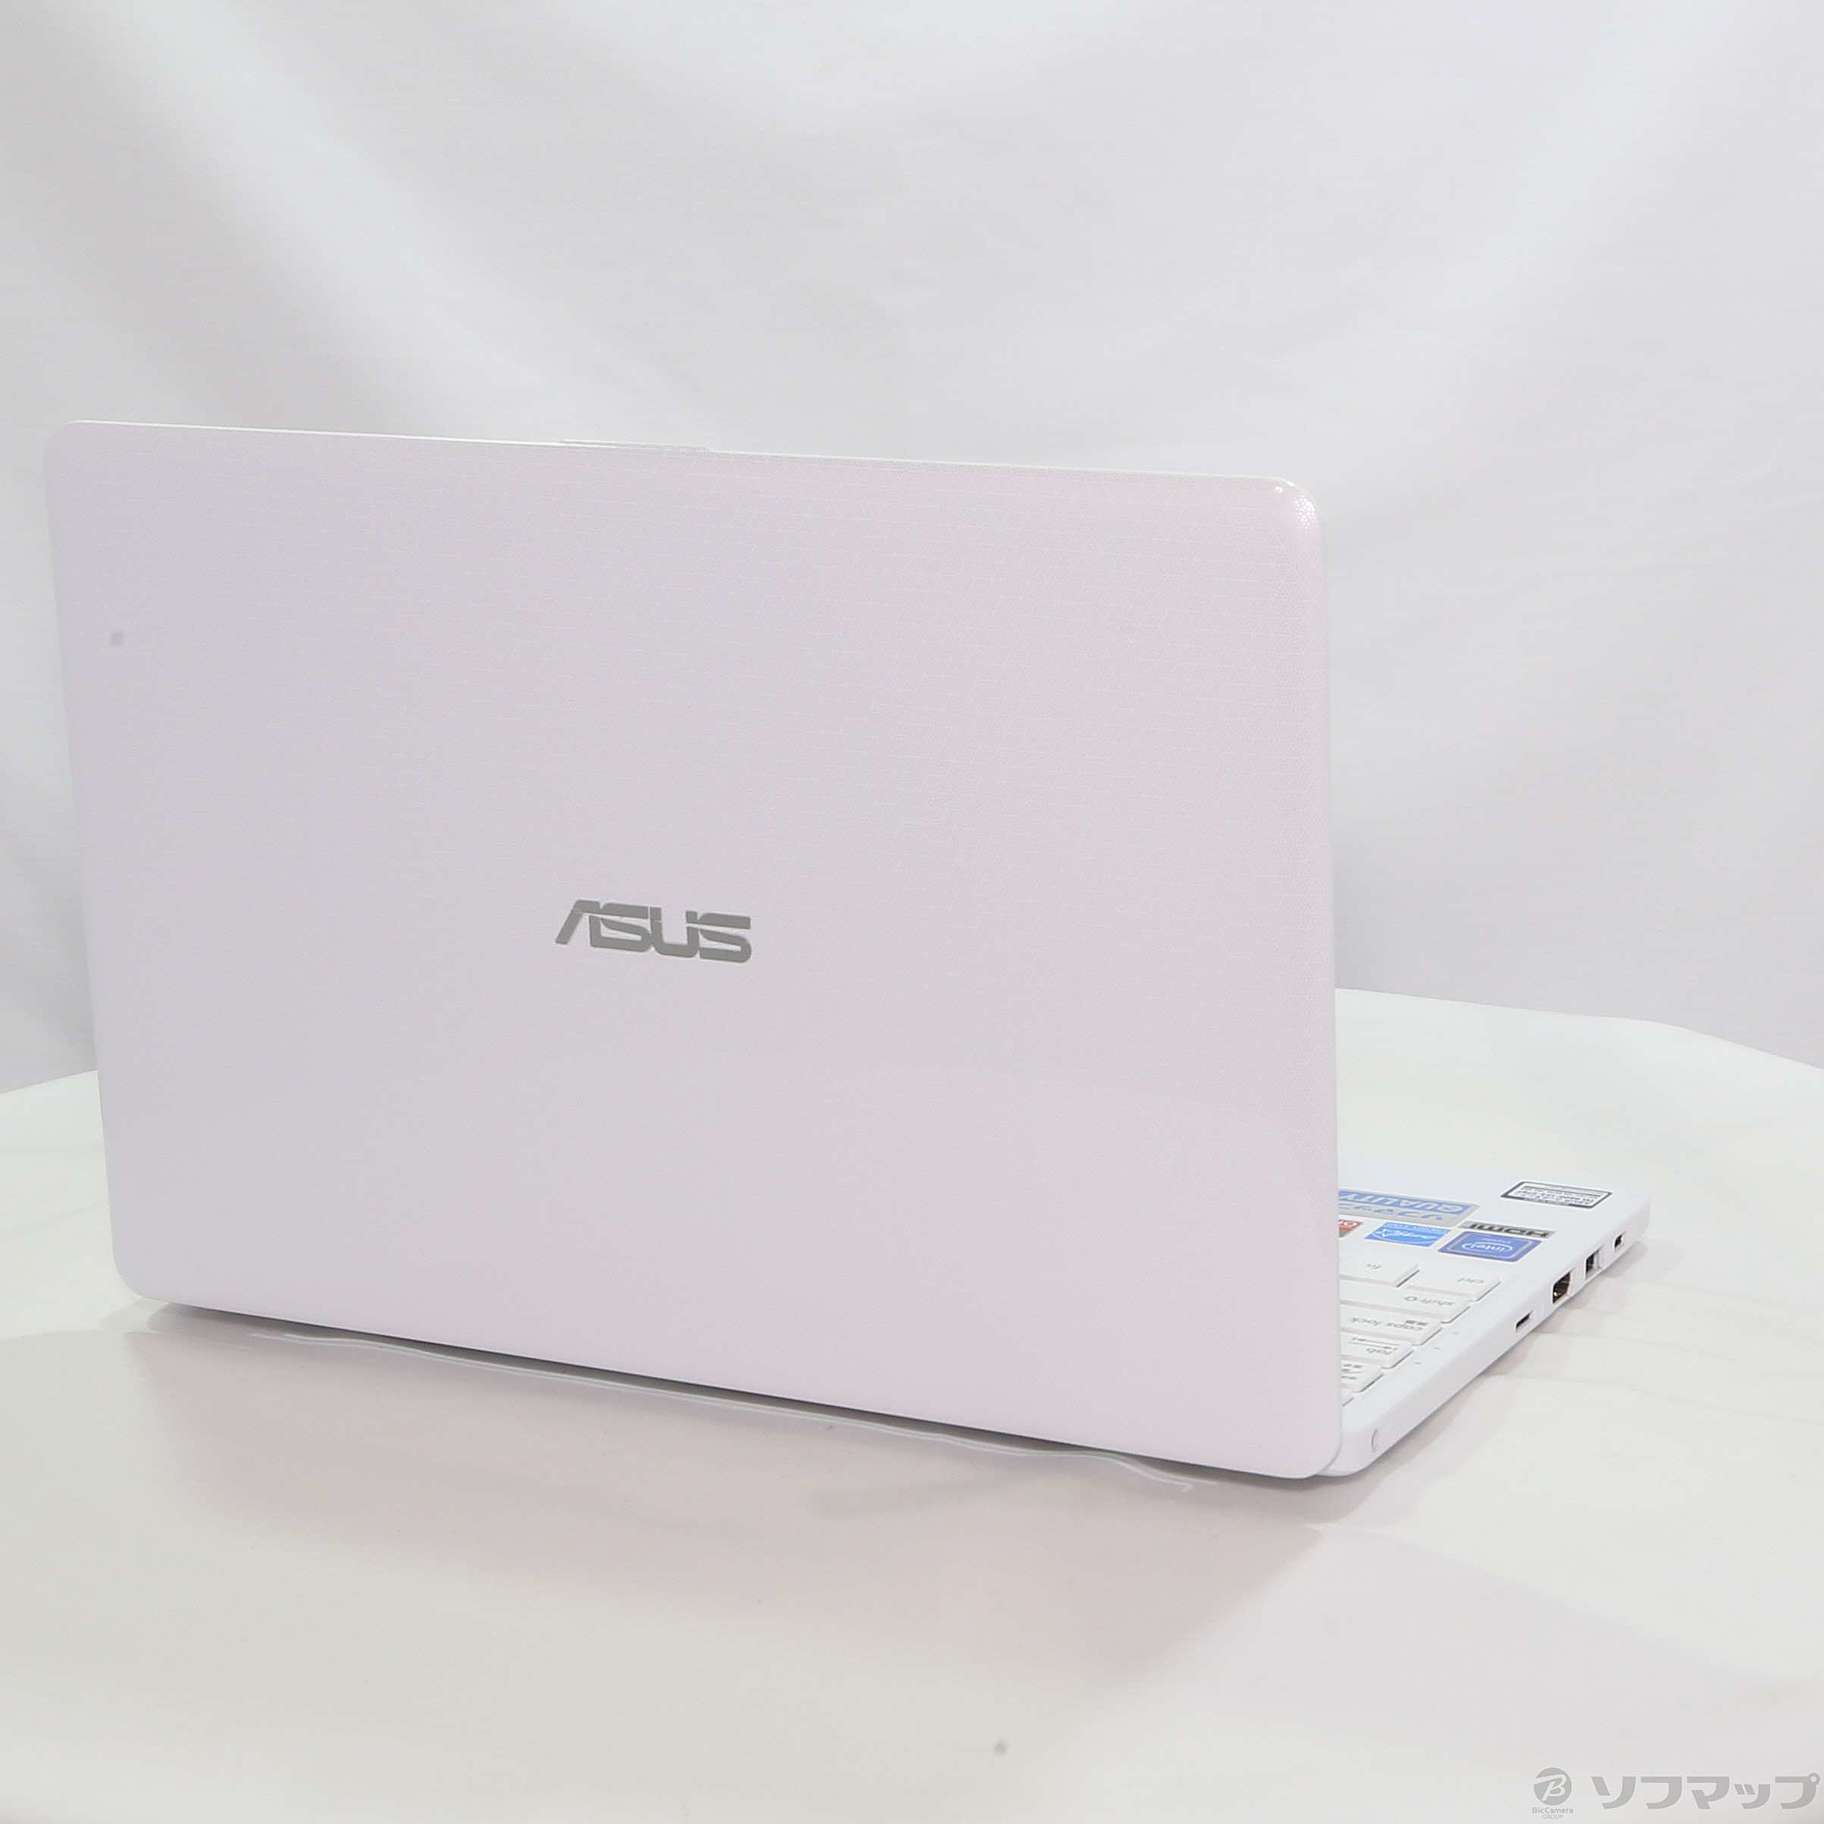 ASUS ノートパソコン E203MA-4000W パールホワイト